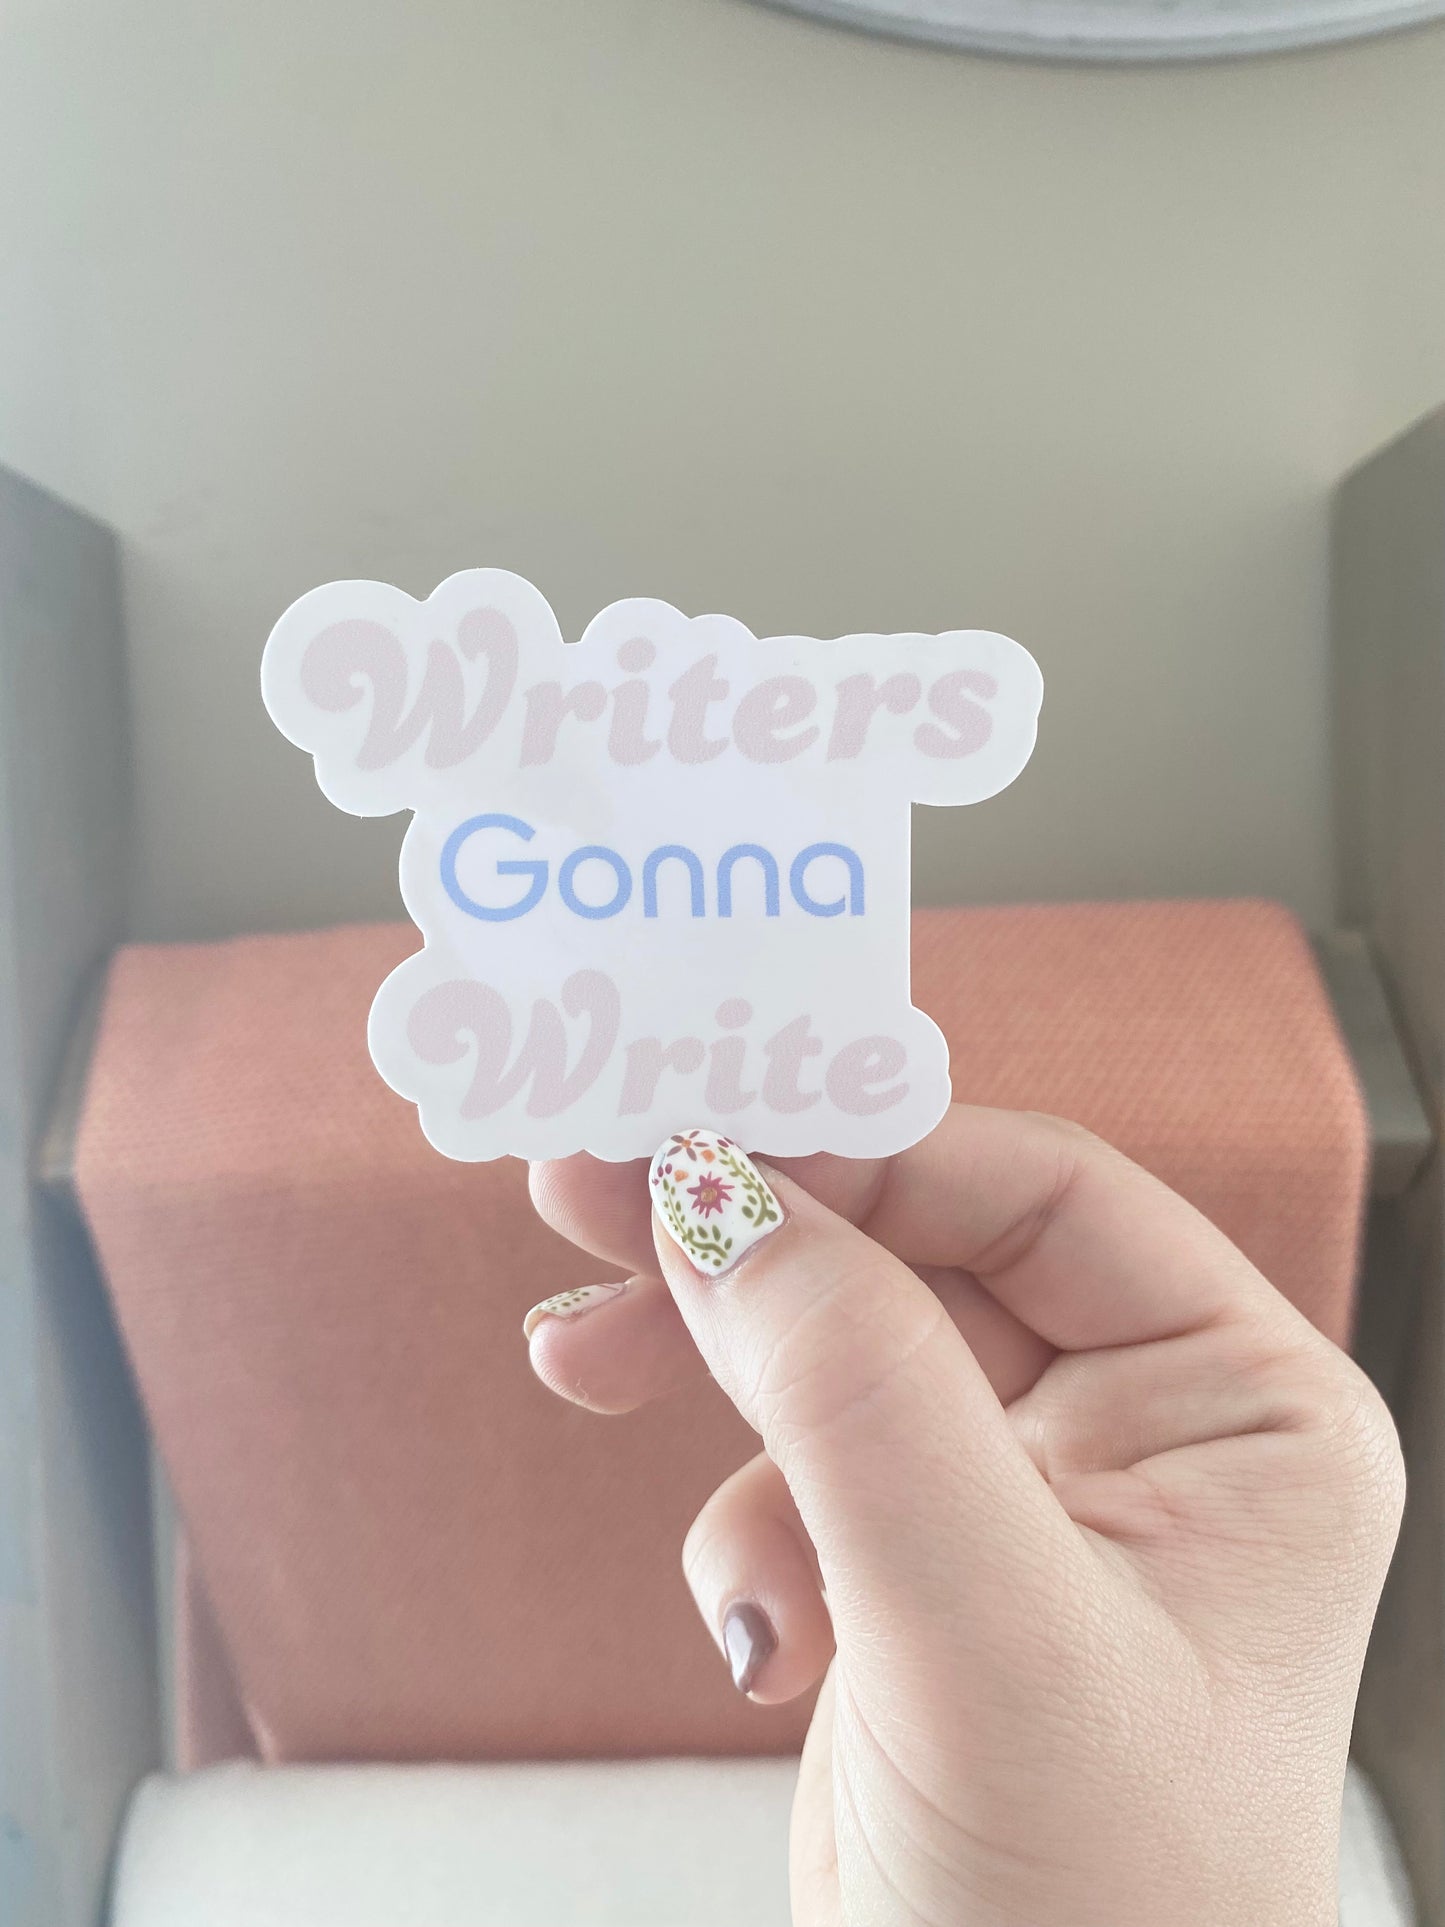 Writers Gonna Write Sticker